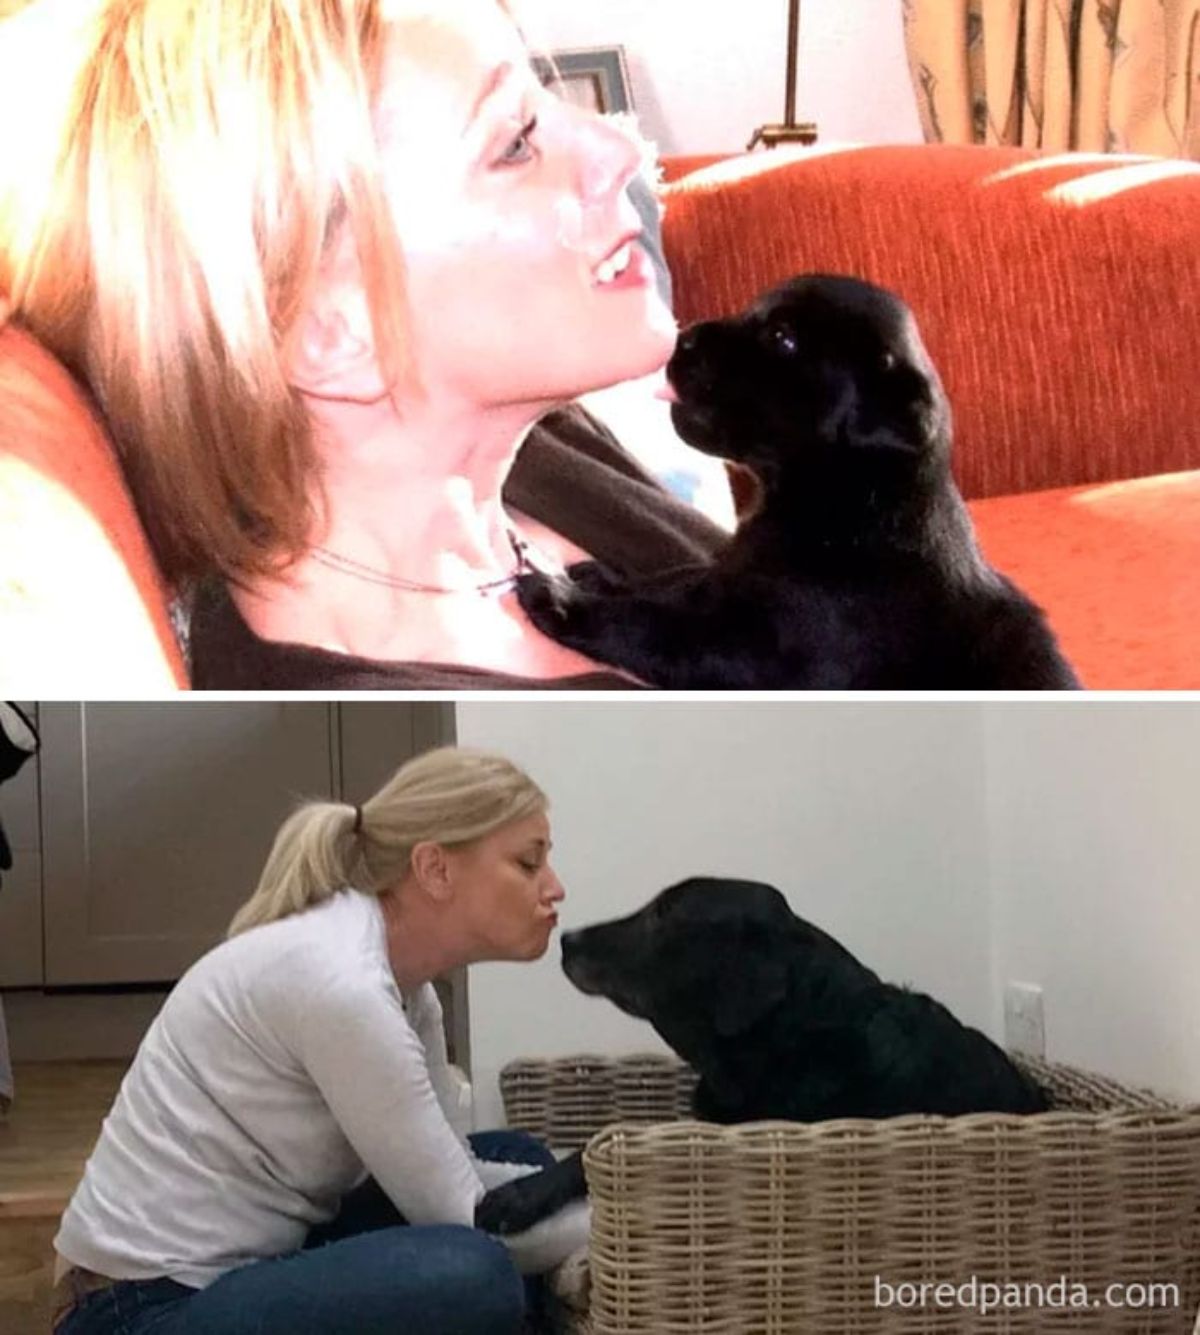 2 photos of a woman kissing a black dog